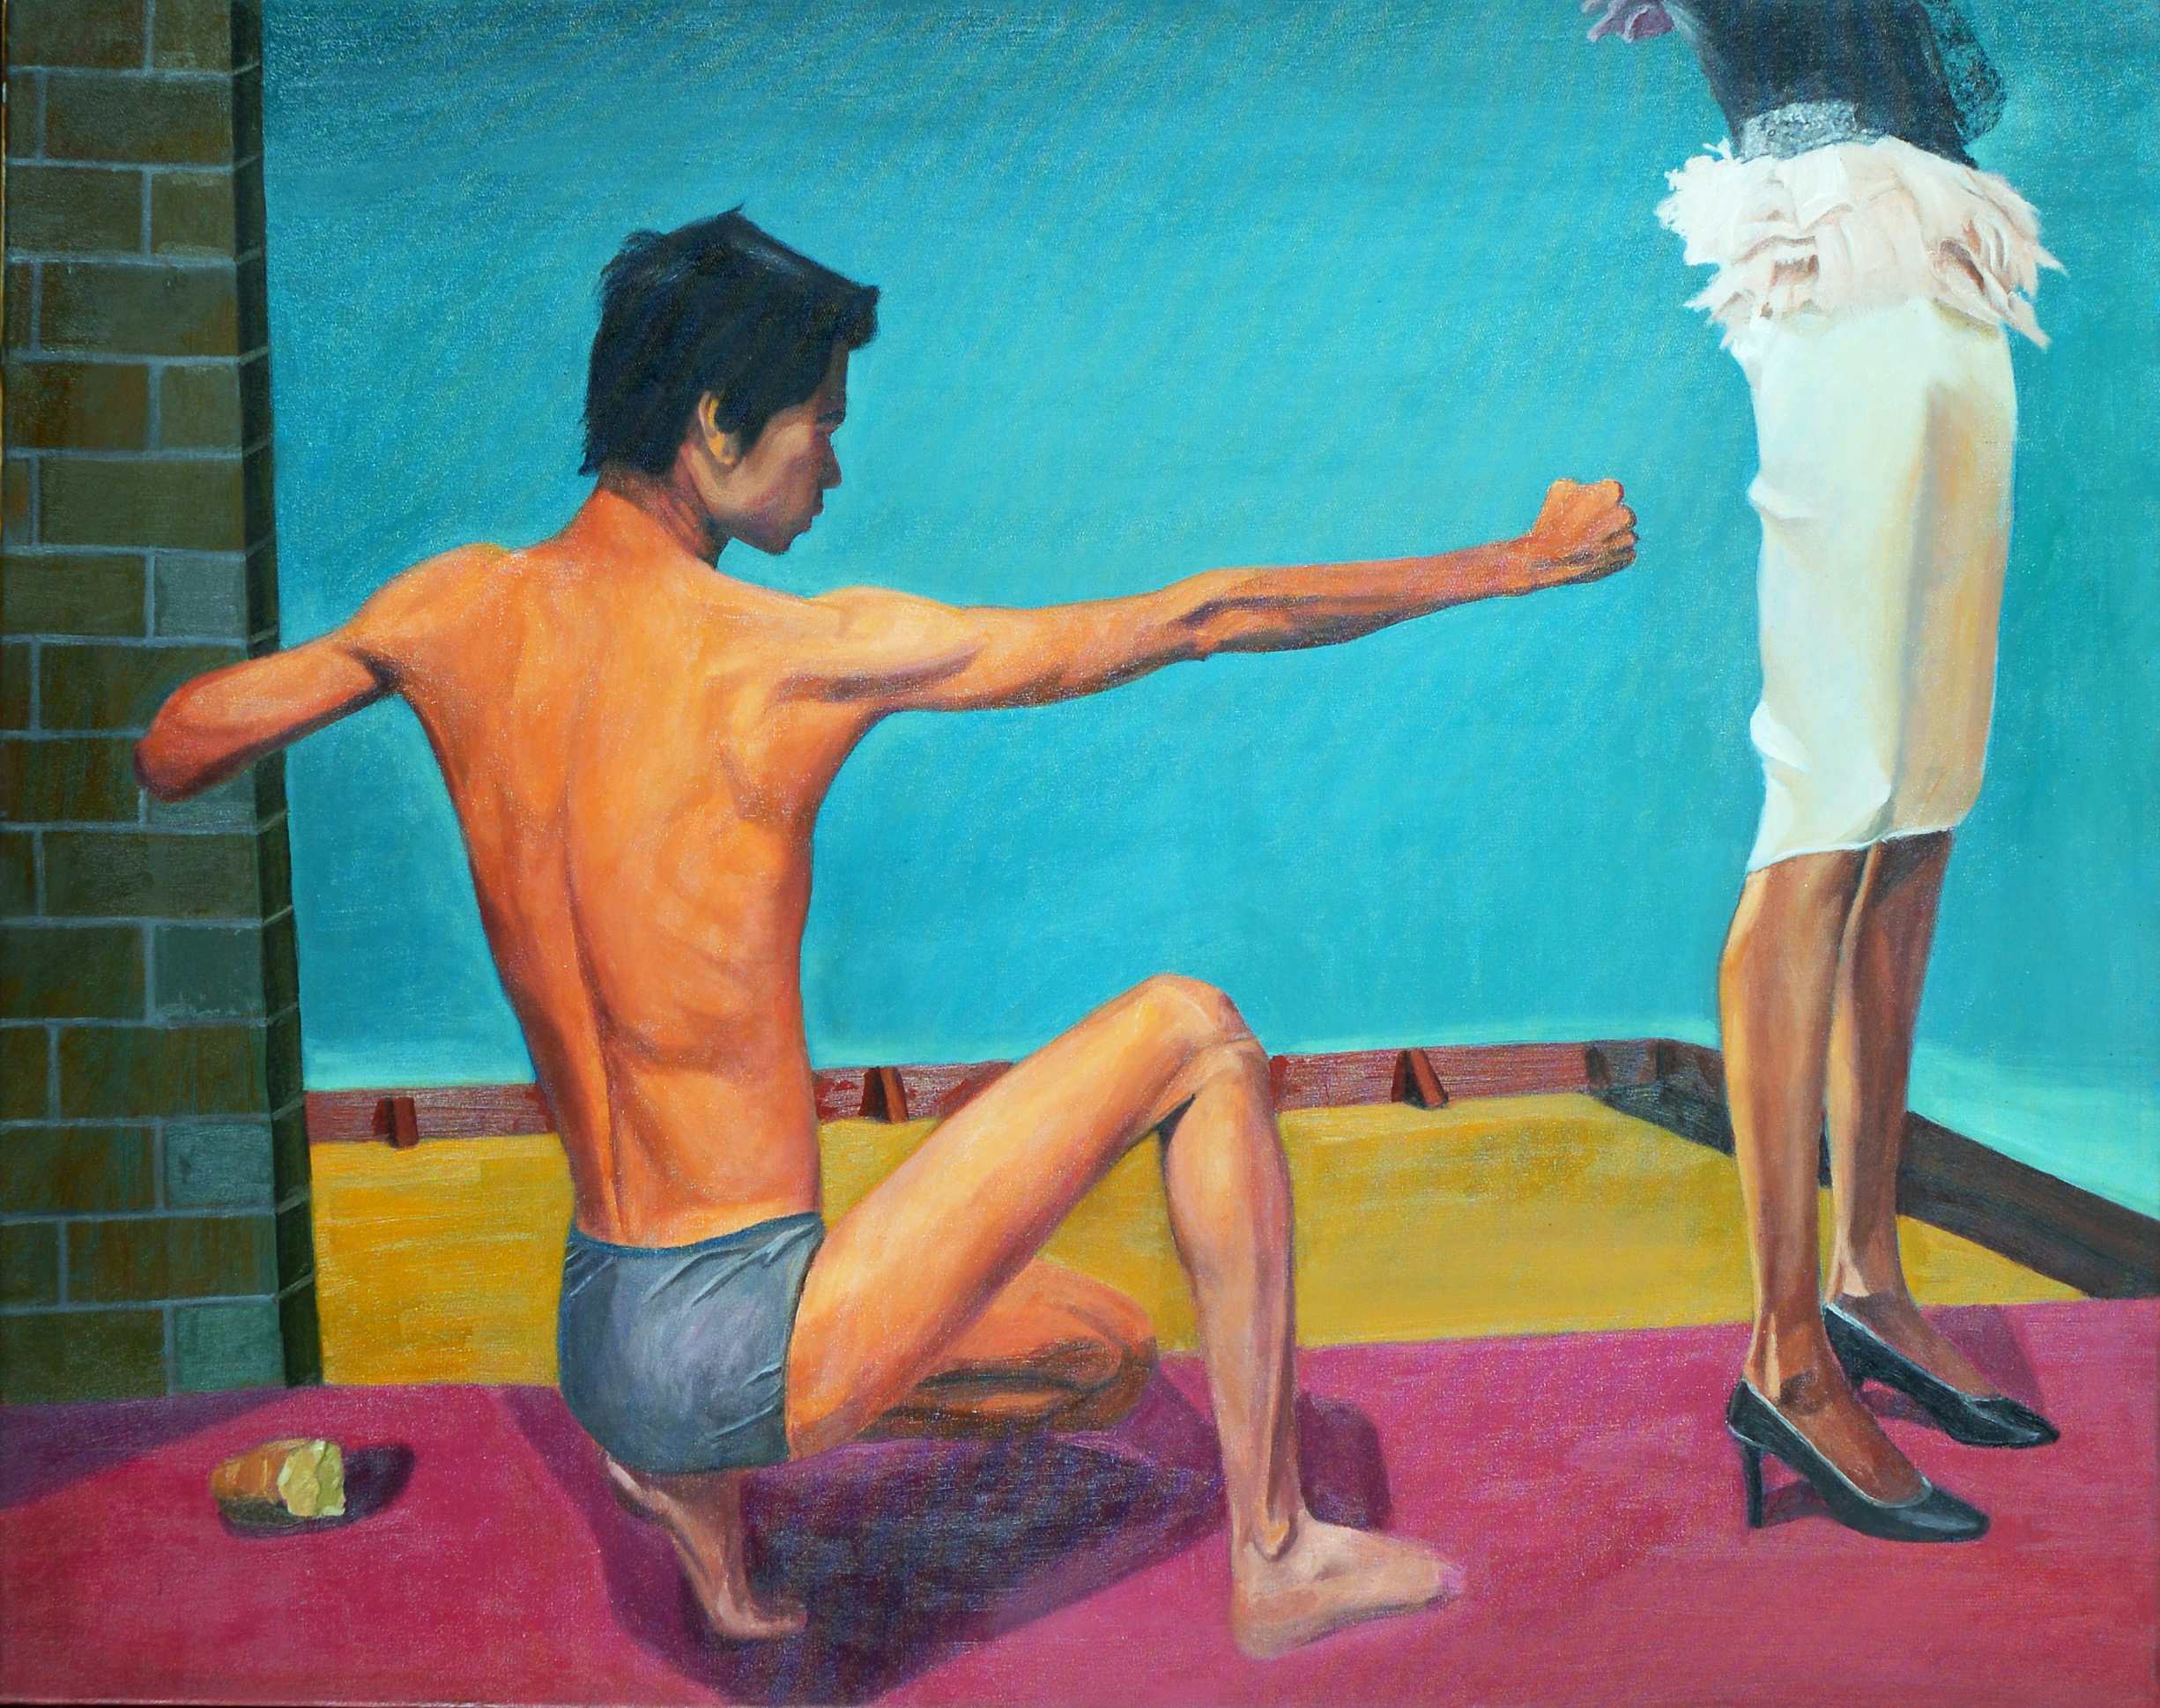 Nguyen Van Phuc, "Courtship", 2009, Oil on canvas